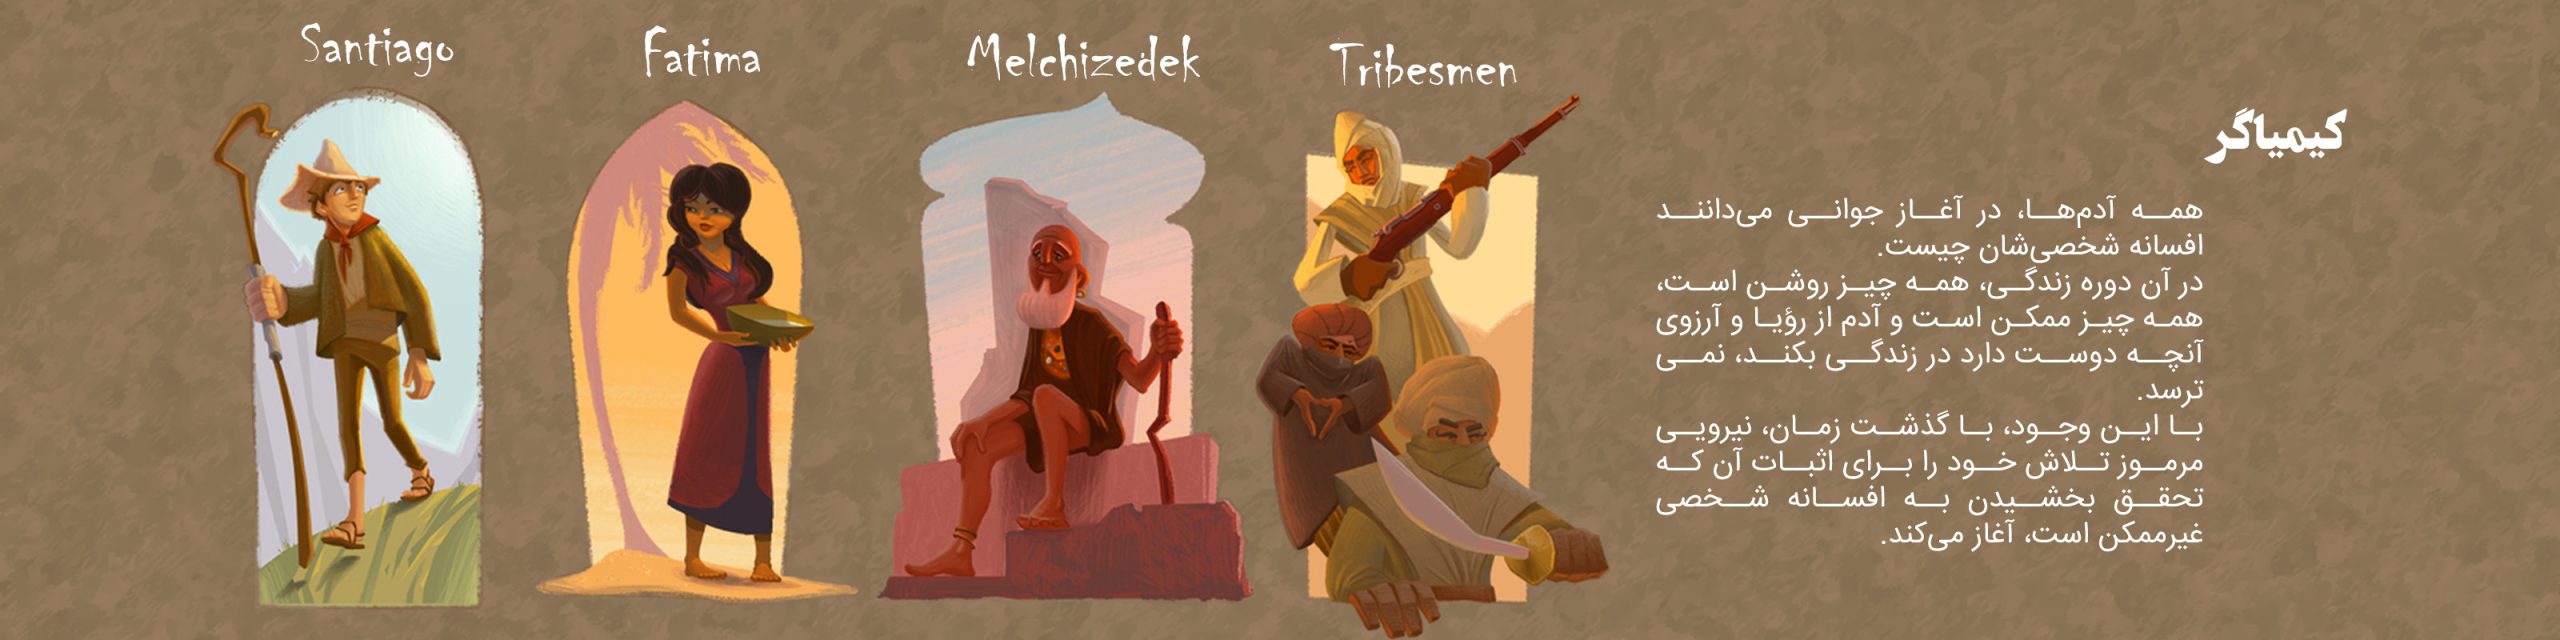 The Alchemist - Slide